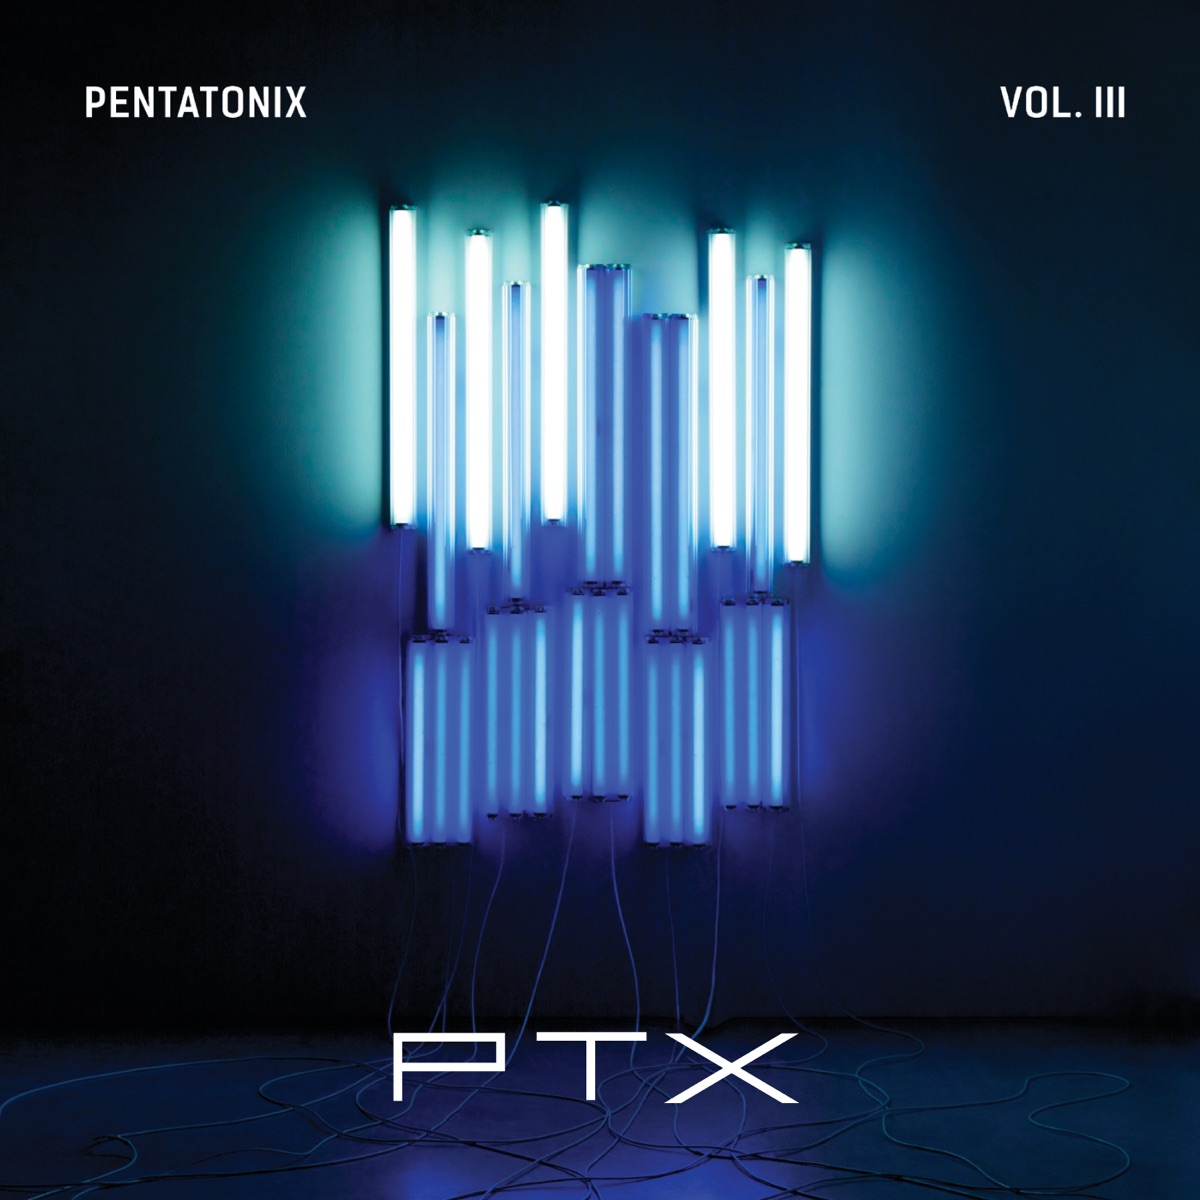 PTX Presents: Top Pop, Vol. I by Pentatonix on Apple Music